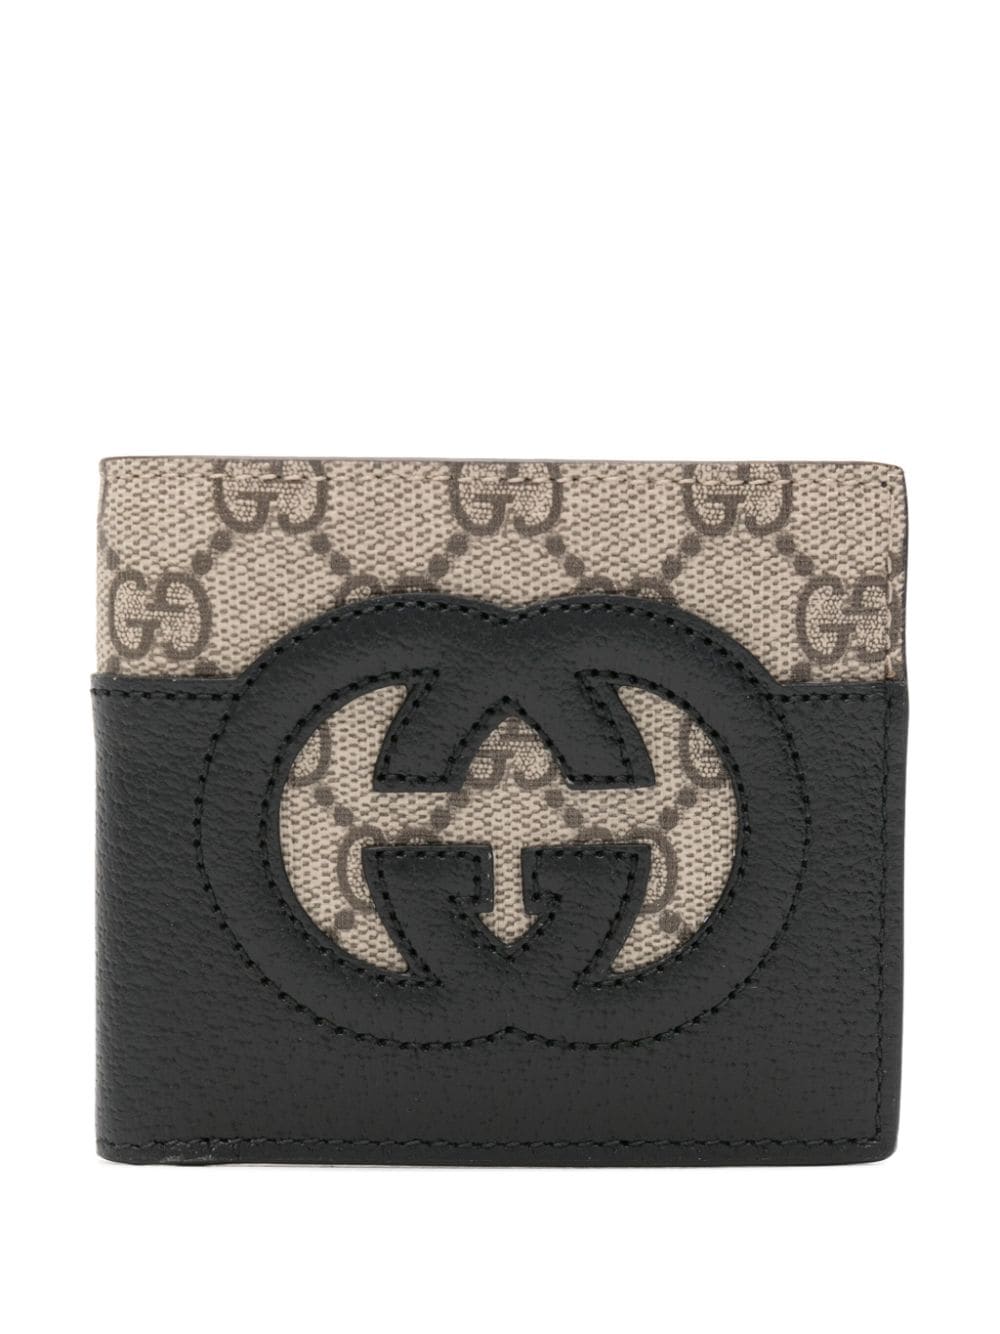 Gucci Interlocking G cut-out wallet - Nero